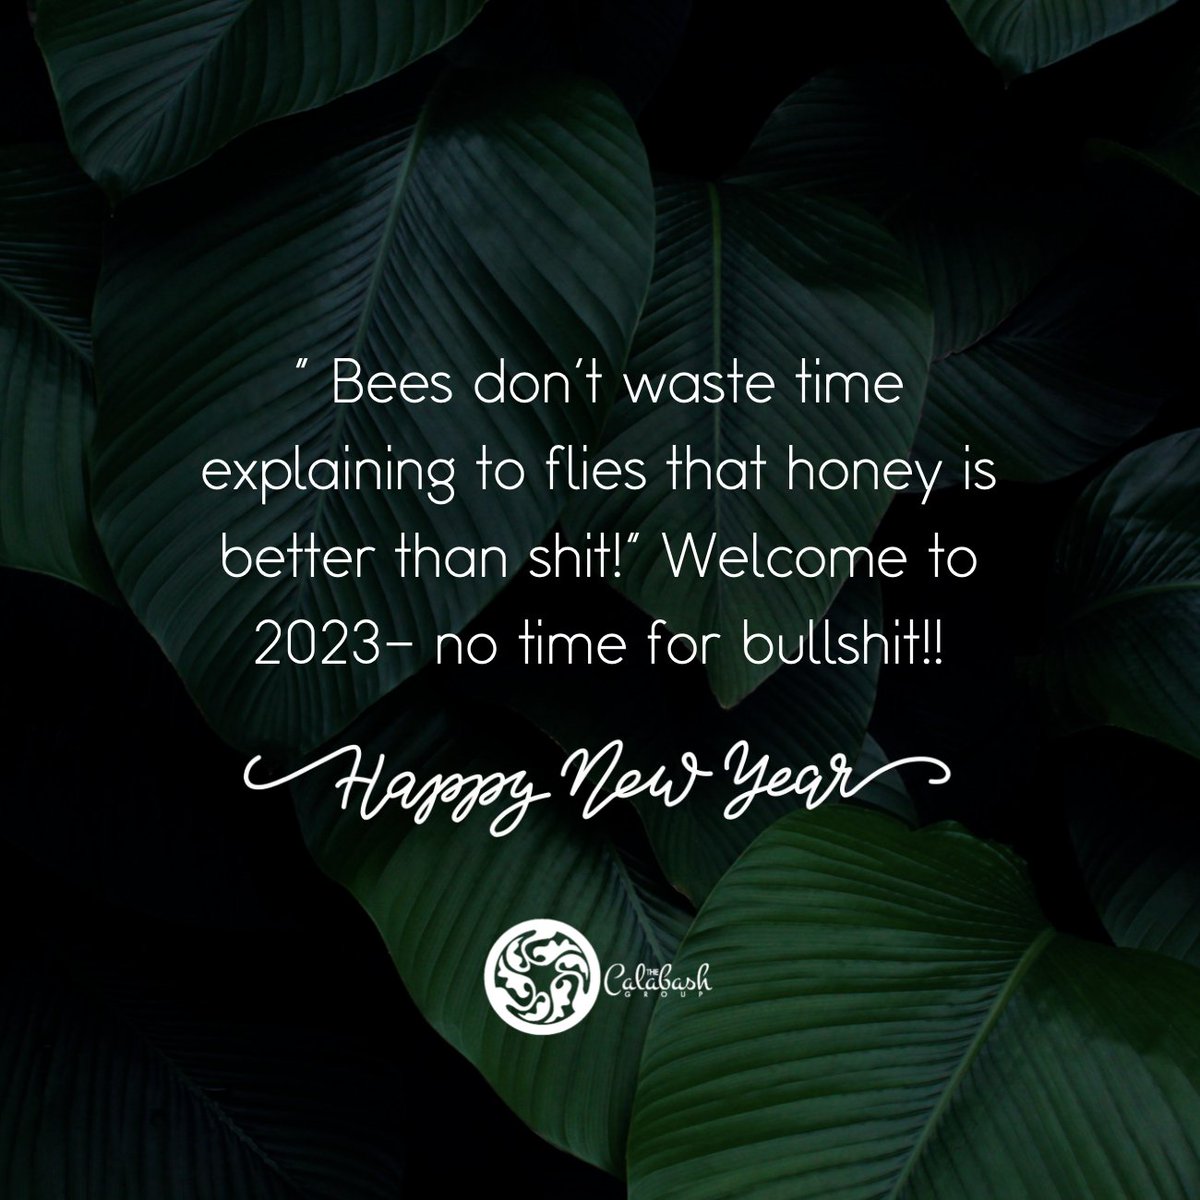 Happy New Year!!

LOVE • LIVE • LIFE • BLESSINGS

#2023 #happynewyear #socialmediamanagementservice #socialmediaforentrepreneurs #contentdevelopment #socialmediahelp #thecalabashgroup #smallbizsquad